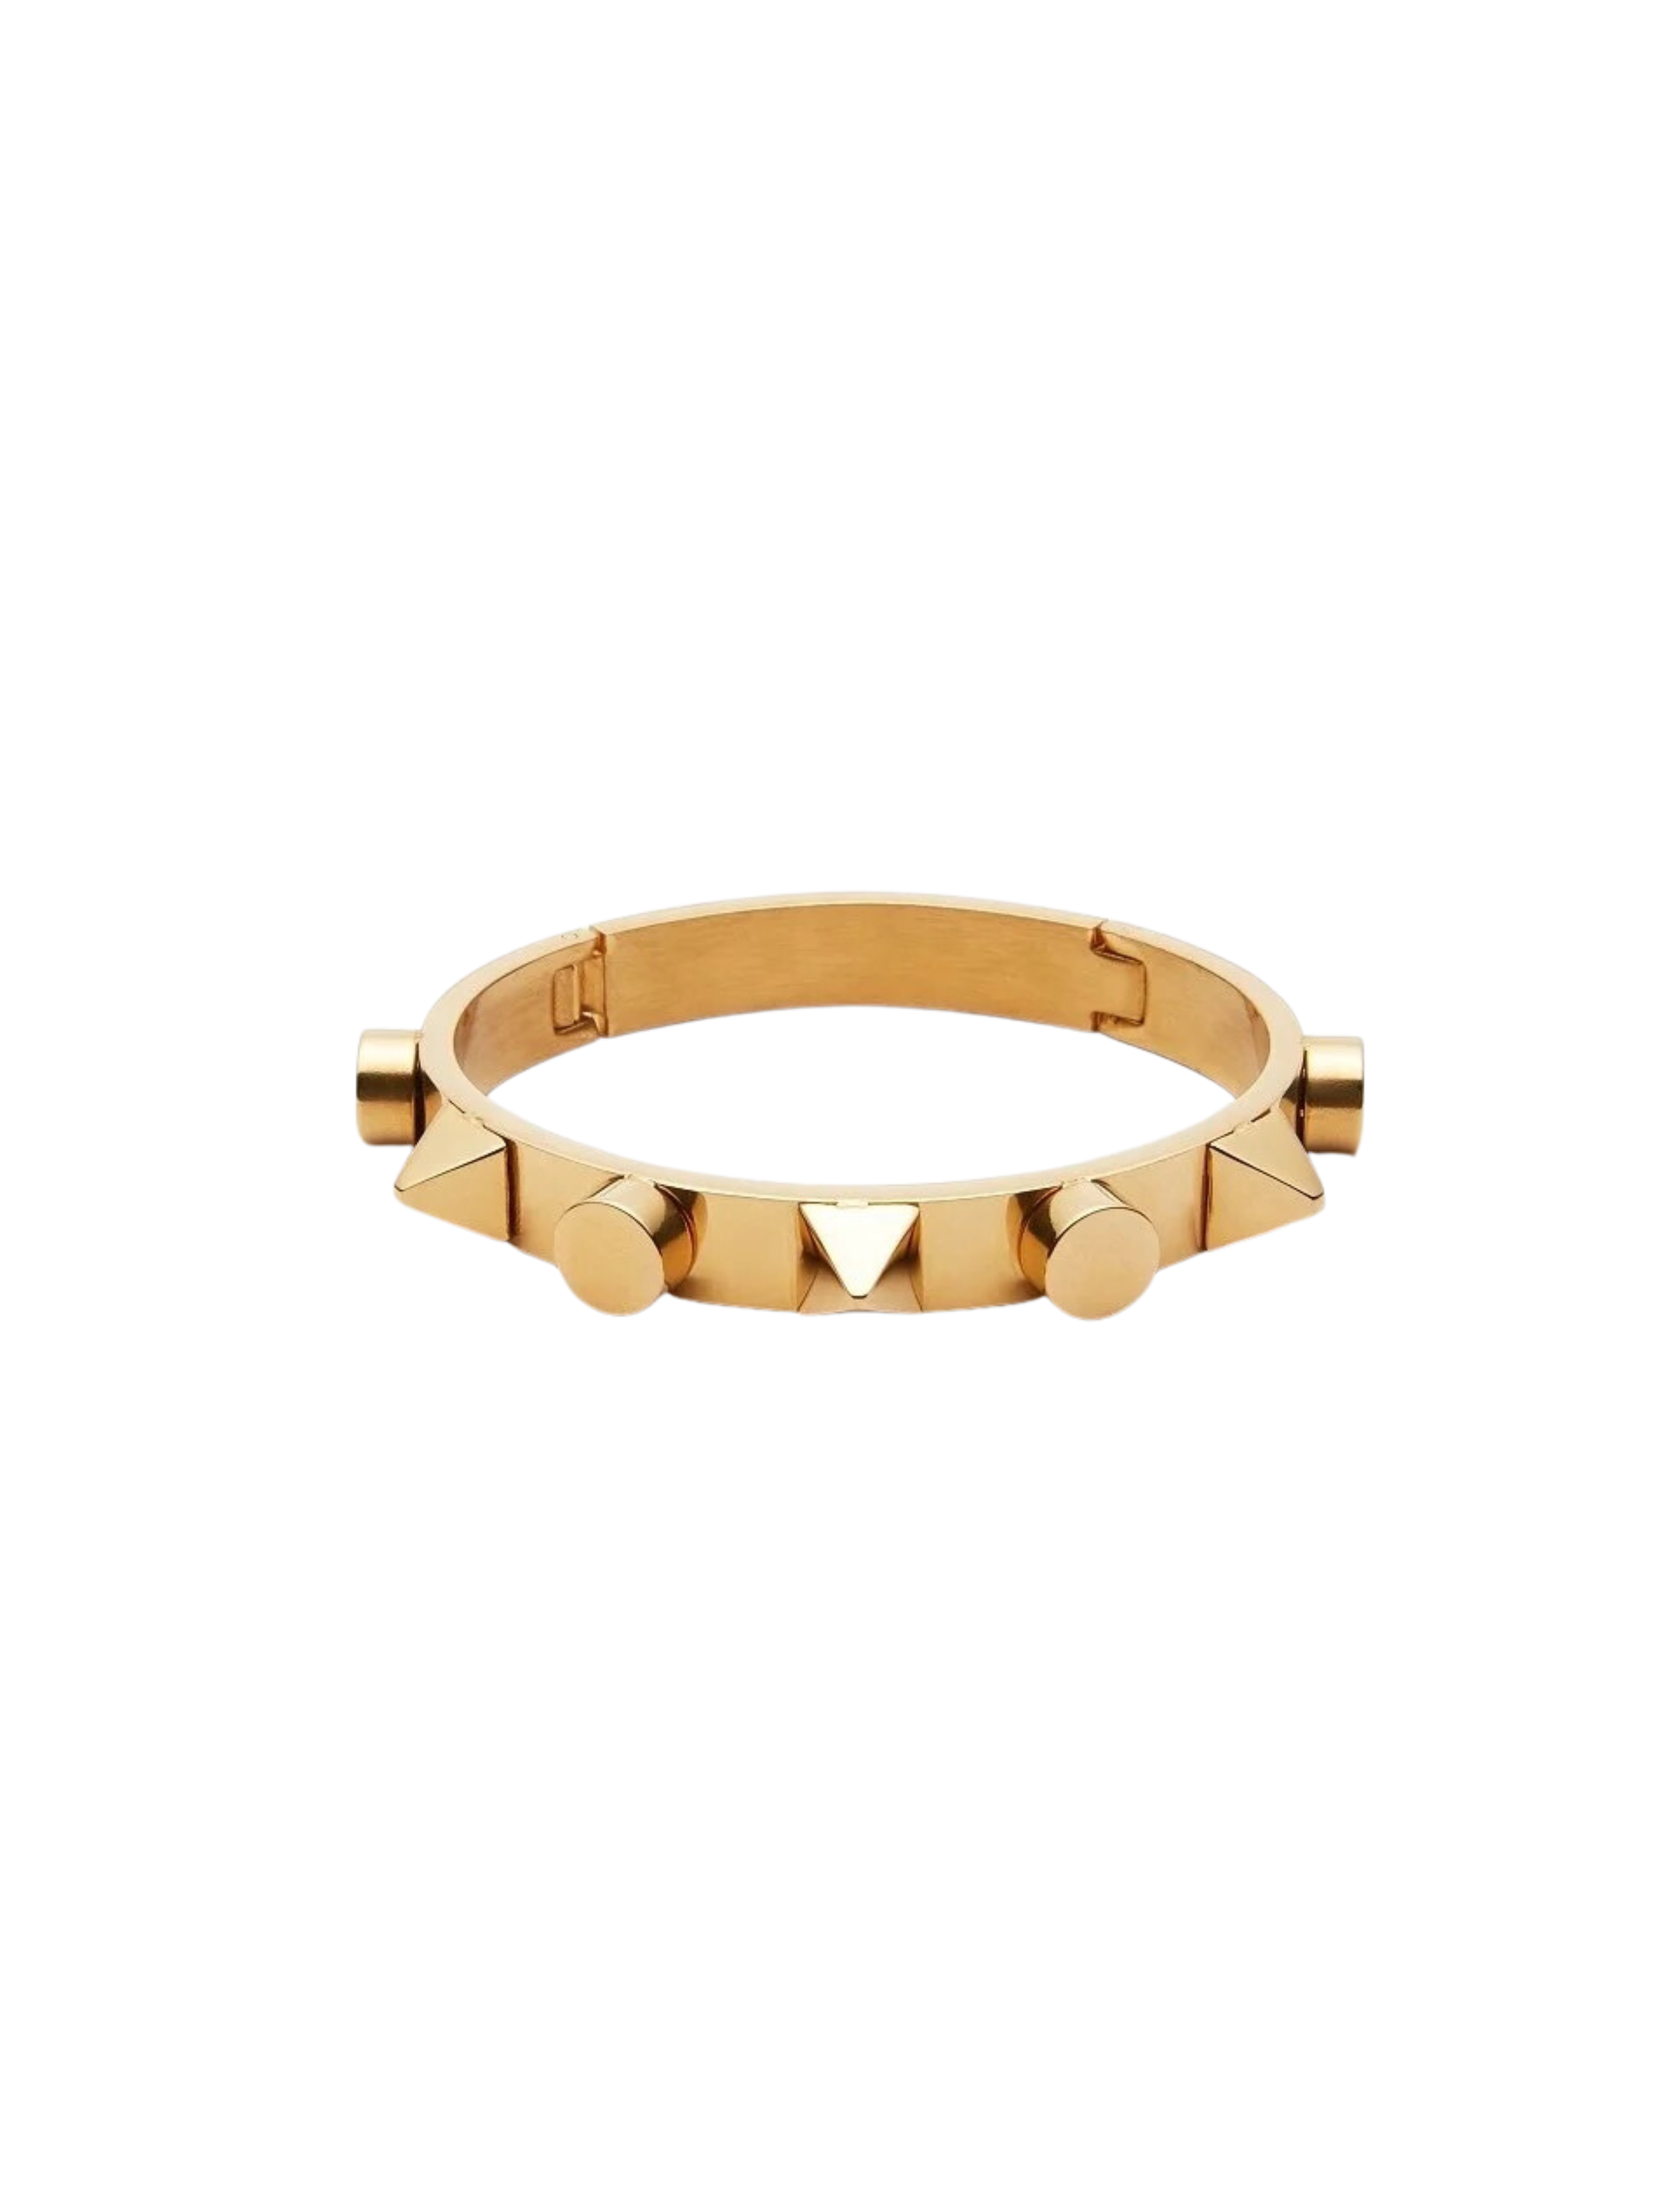 GOLDxTEAL studded gold bracelet.